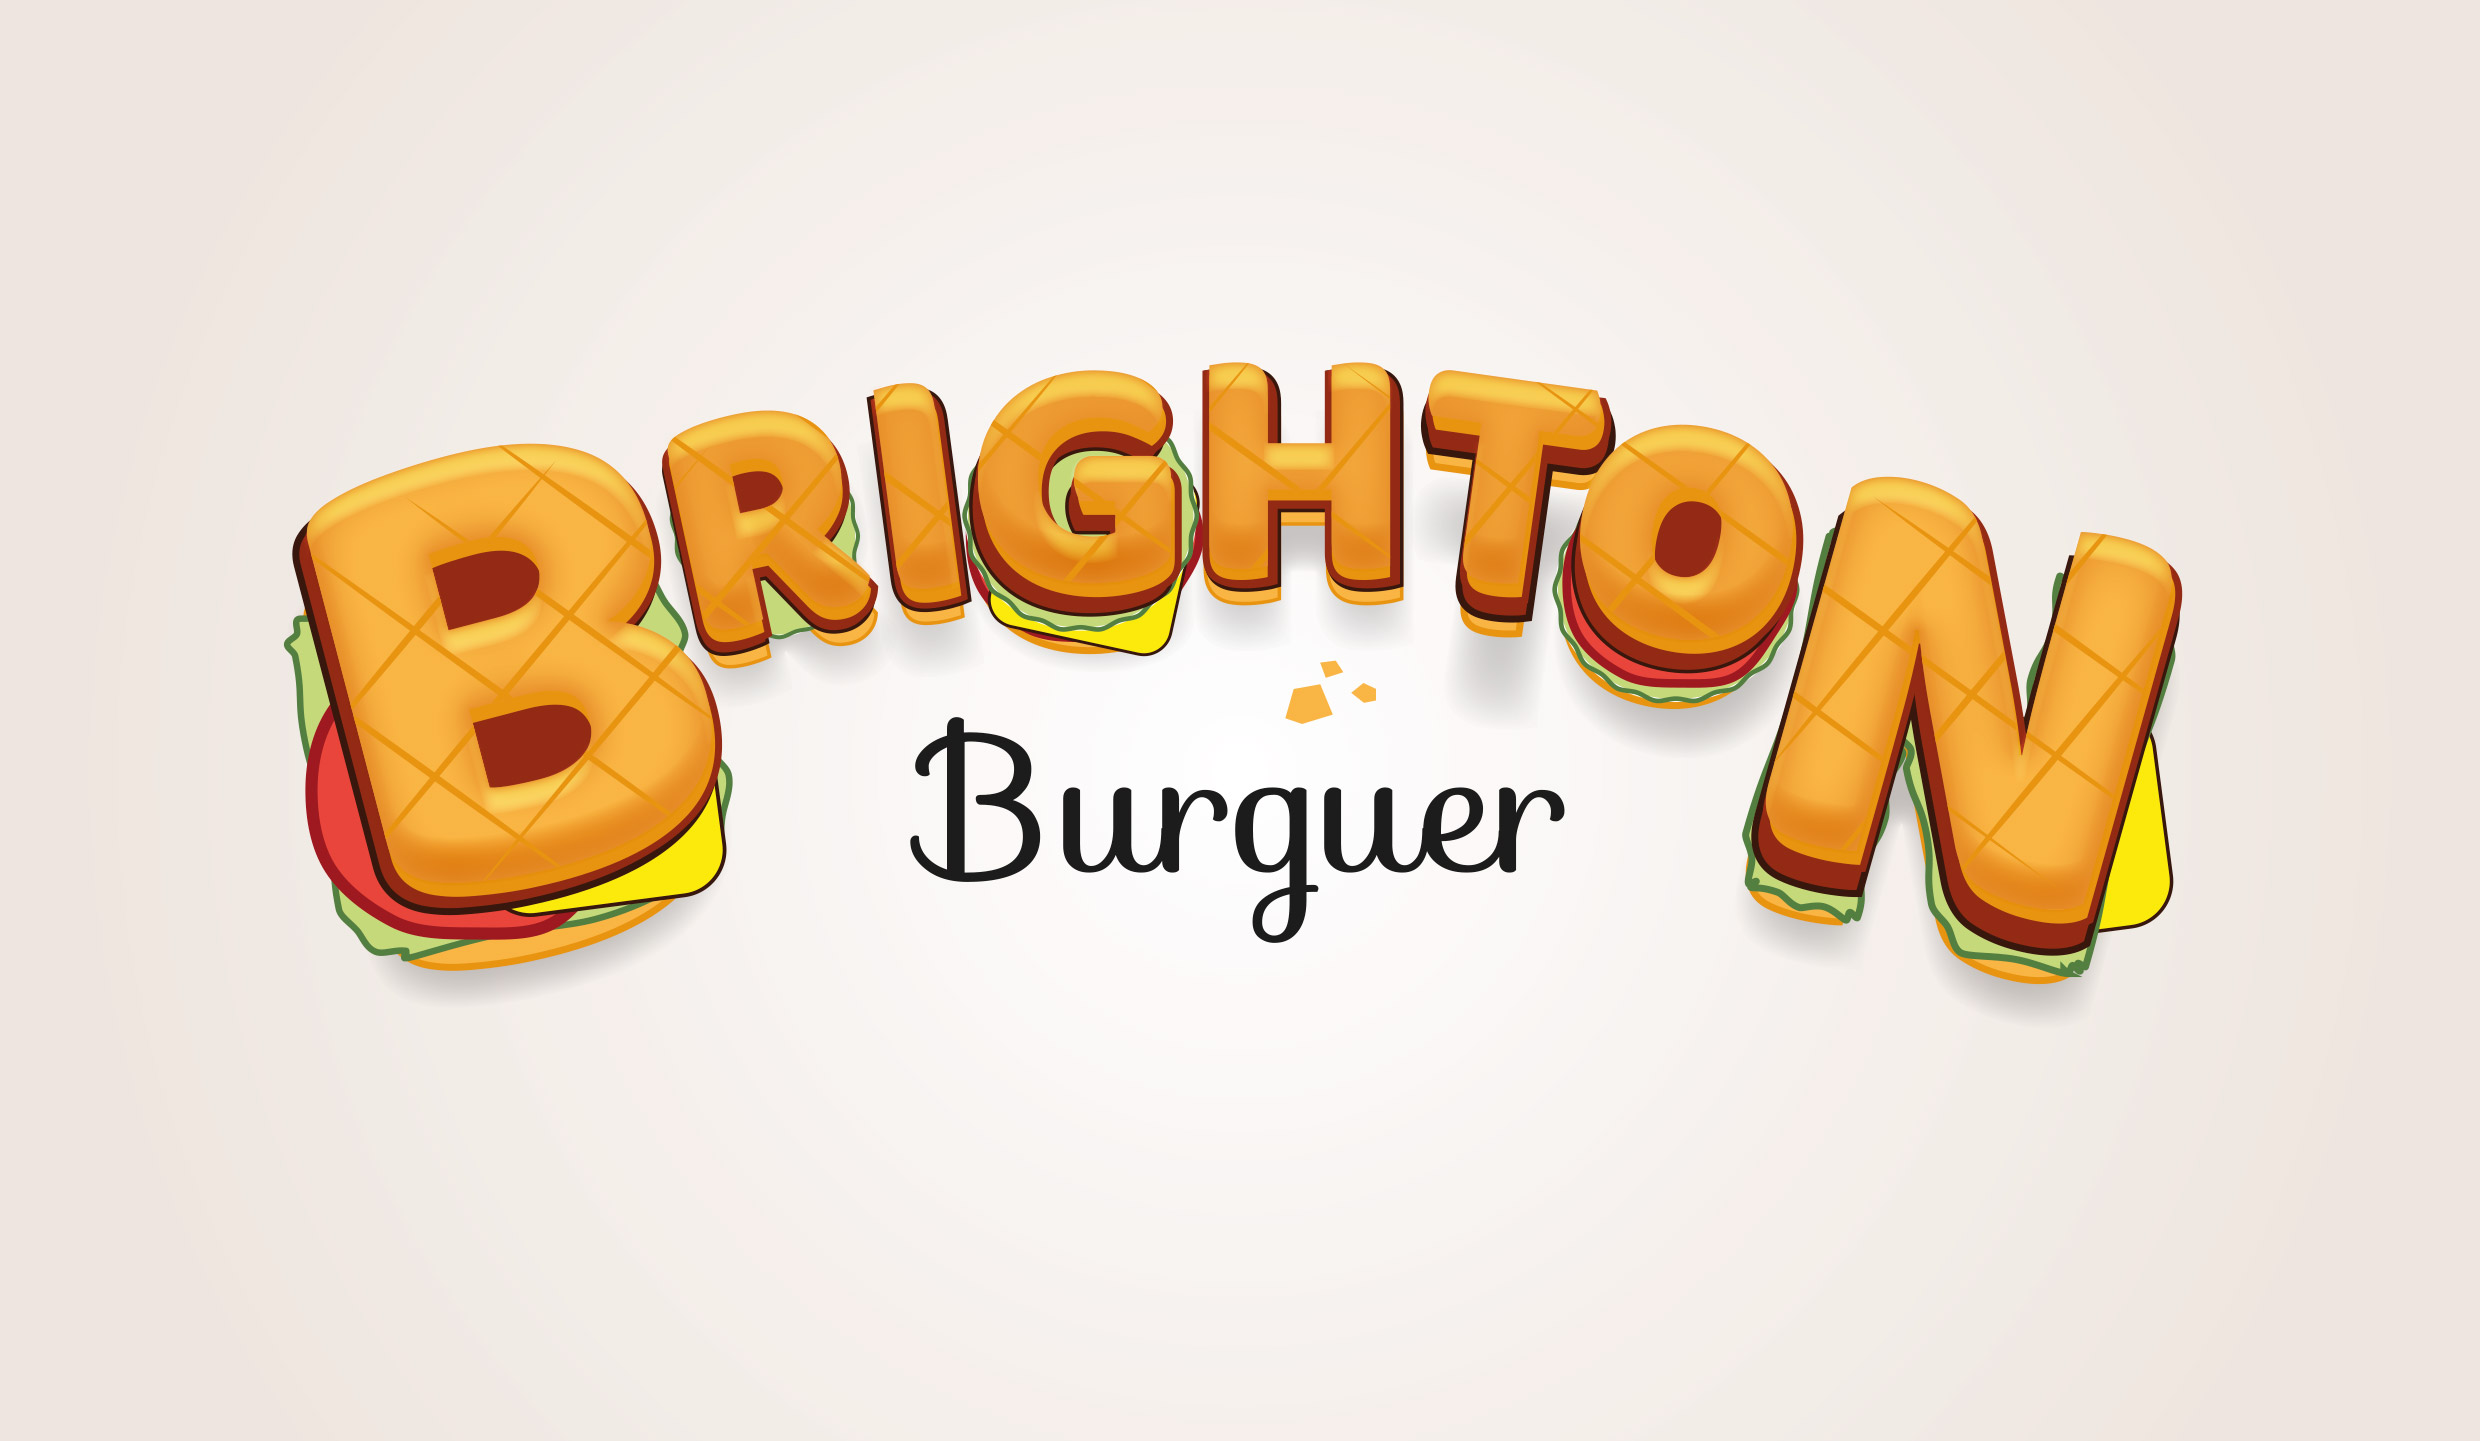 Burguer Brighton - Logotipo